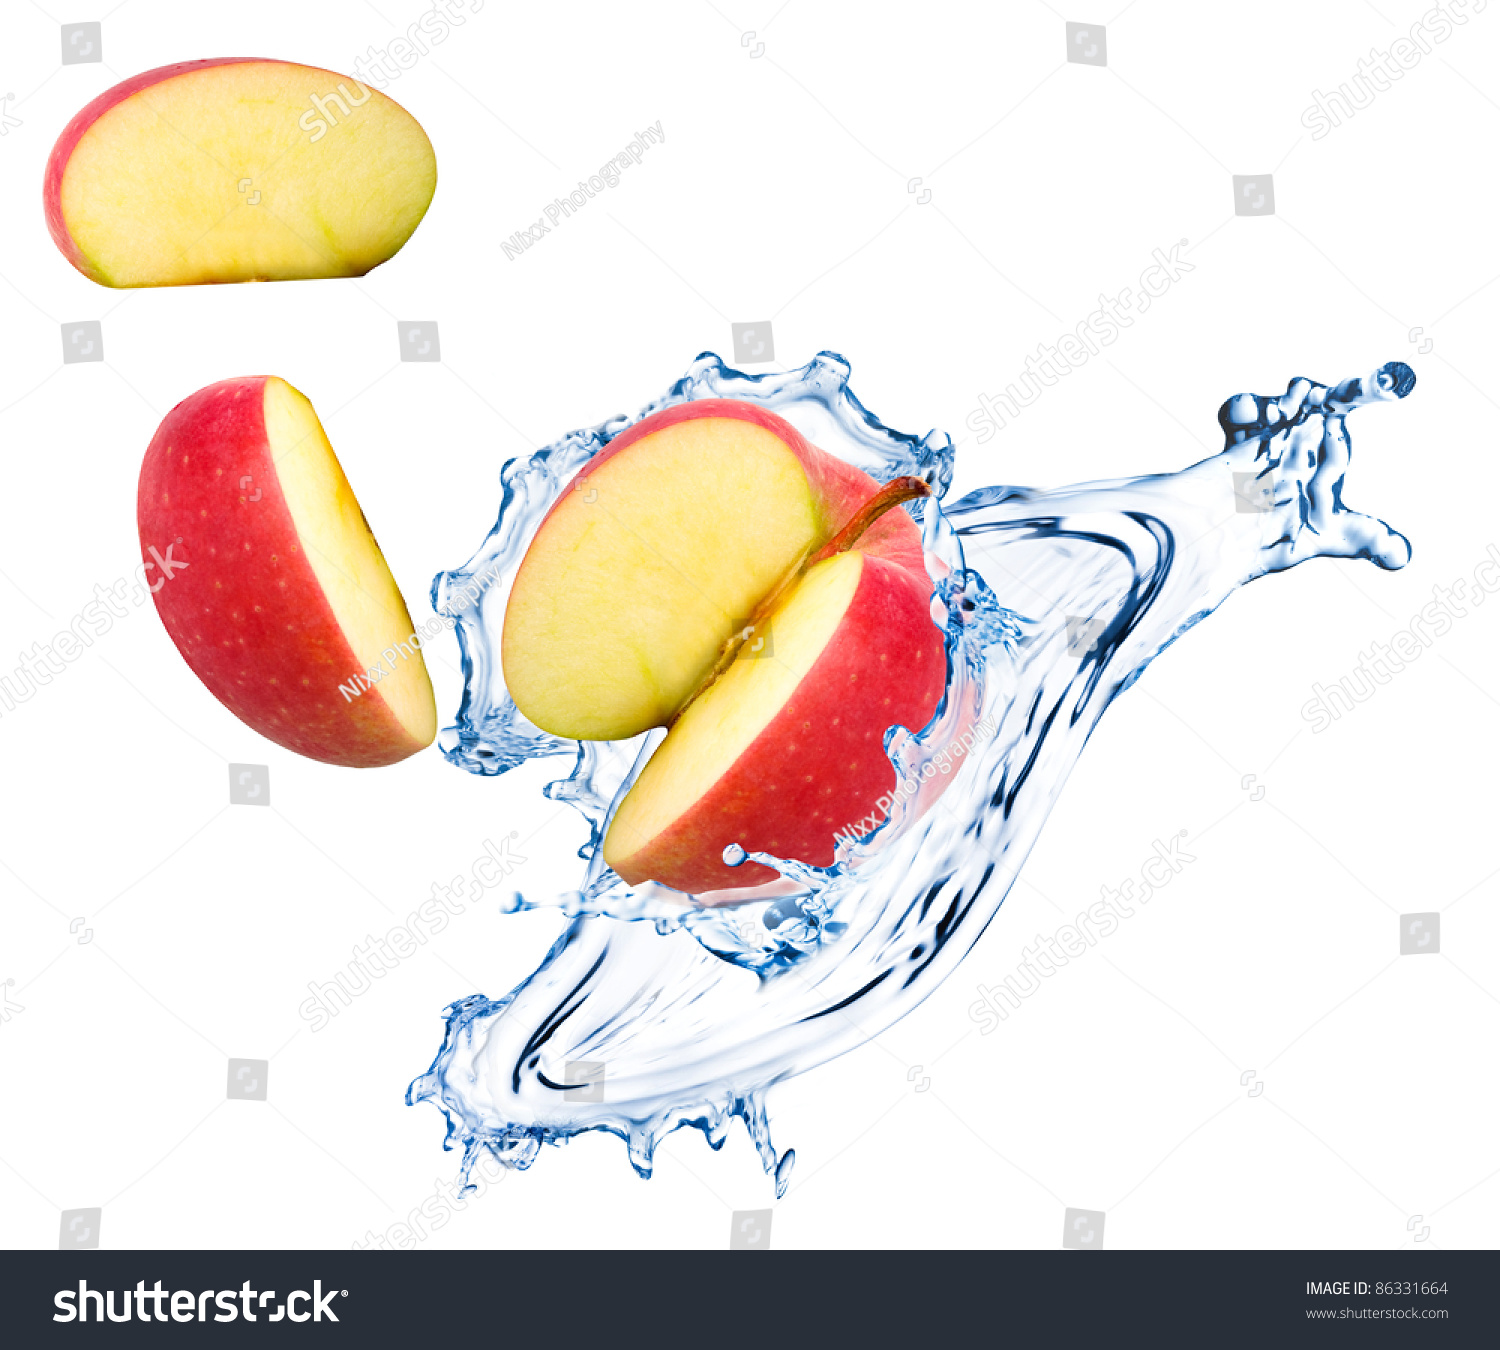 Red Apple Slices Water Splash Stock Photo Edit Now 86331664